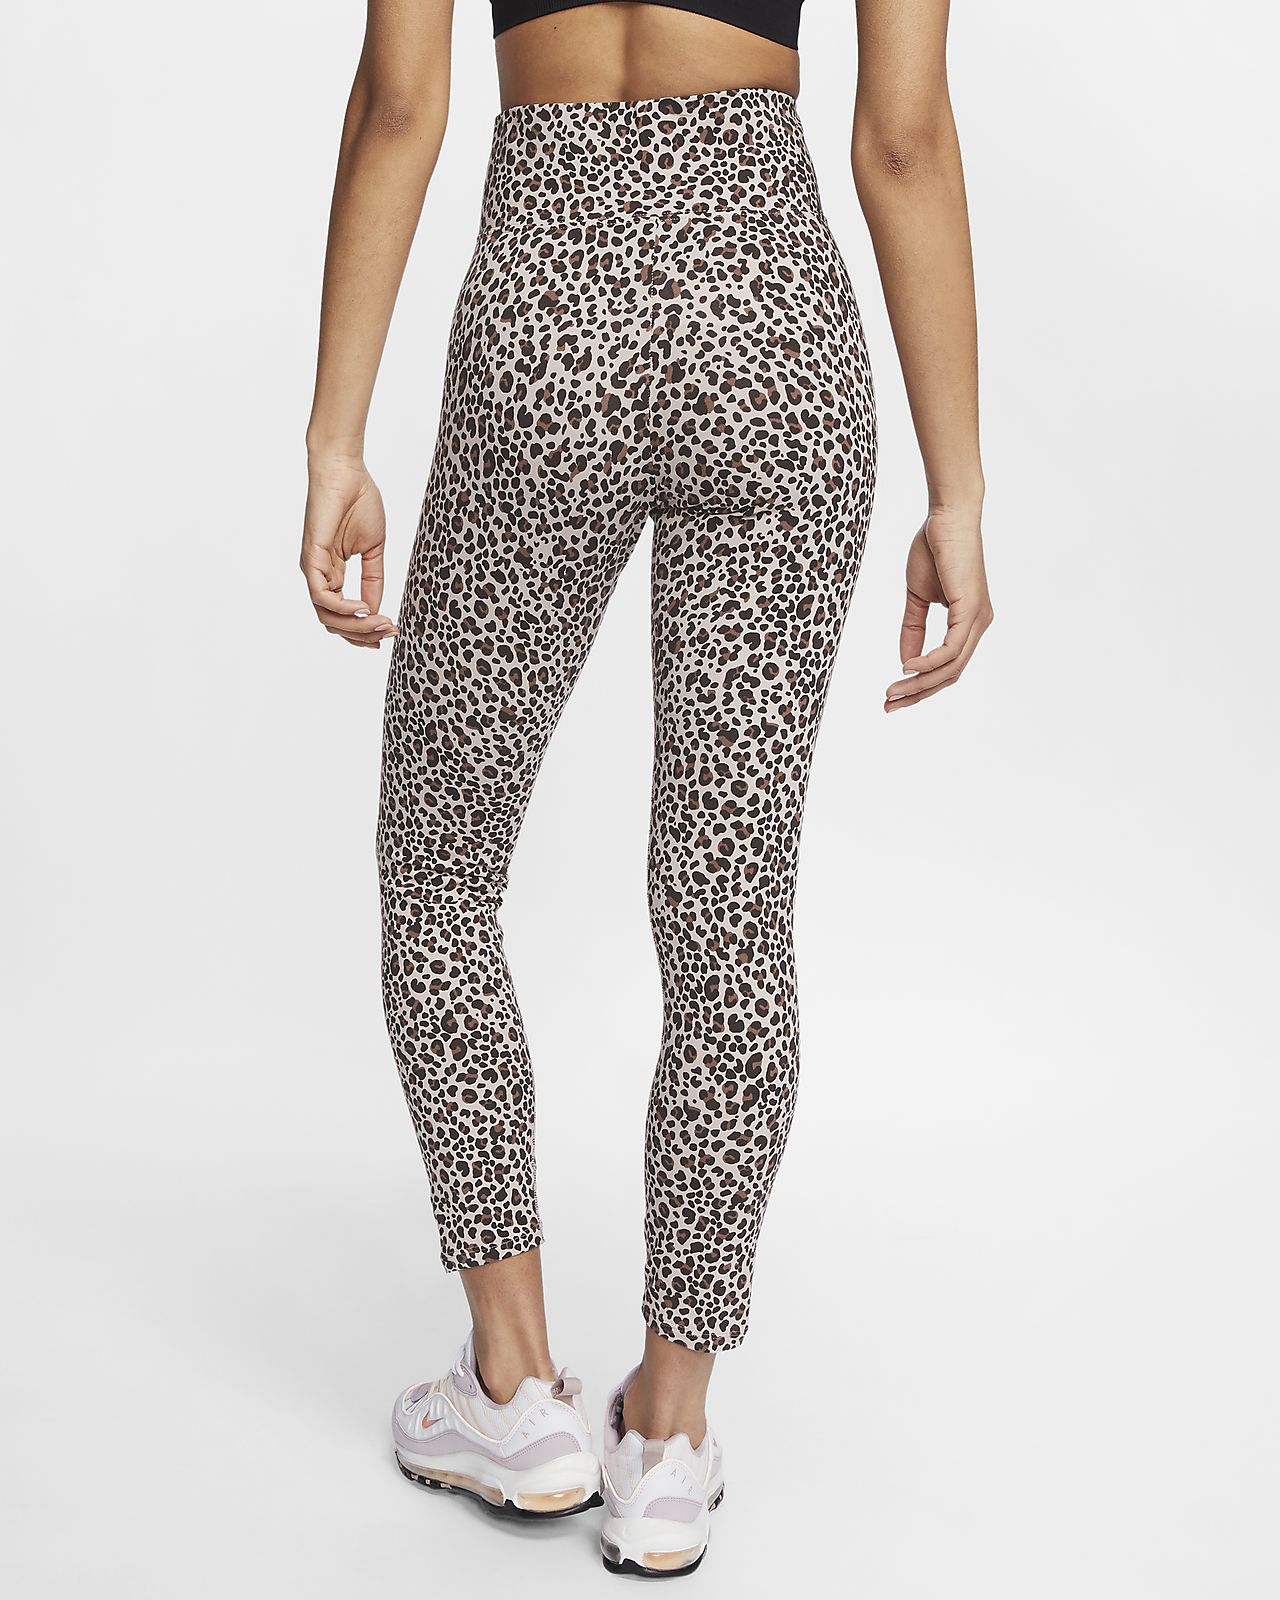 leopard print leggings nike